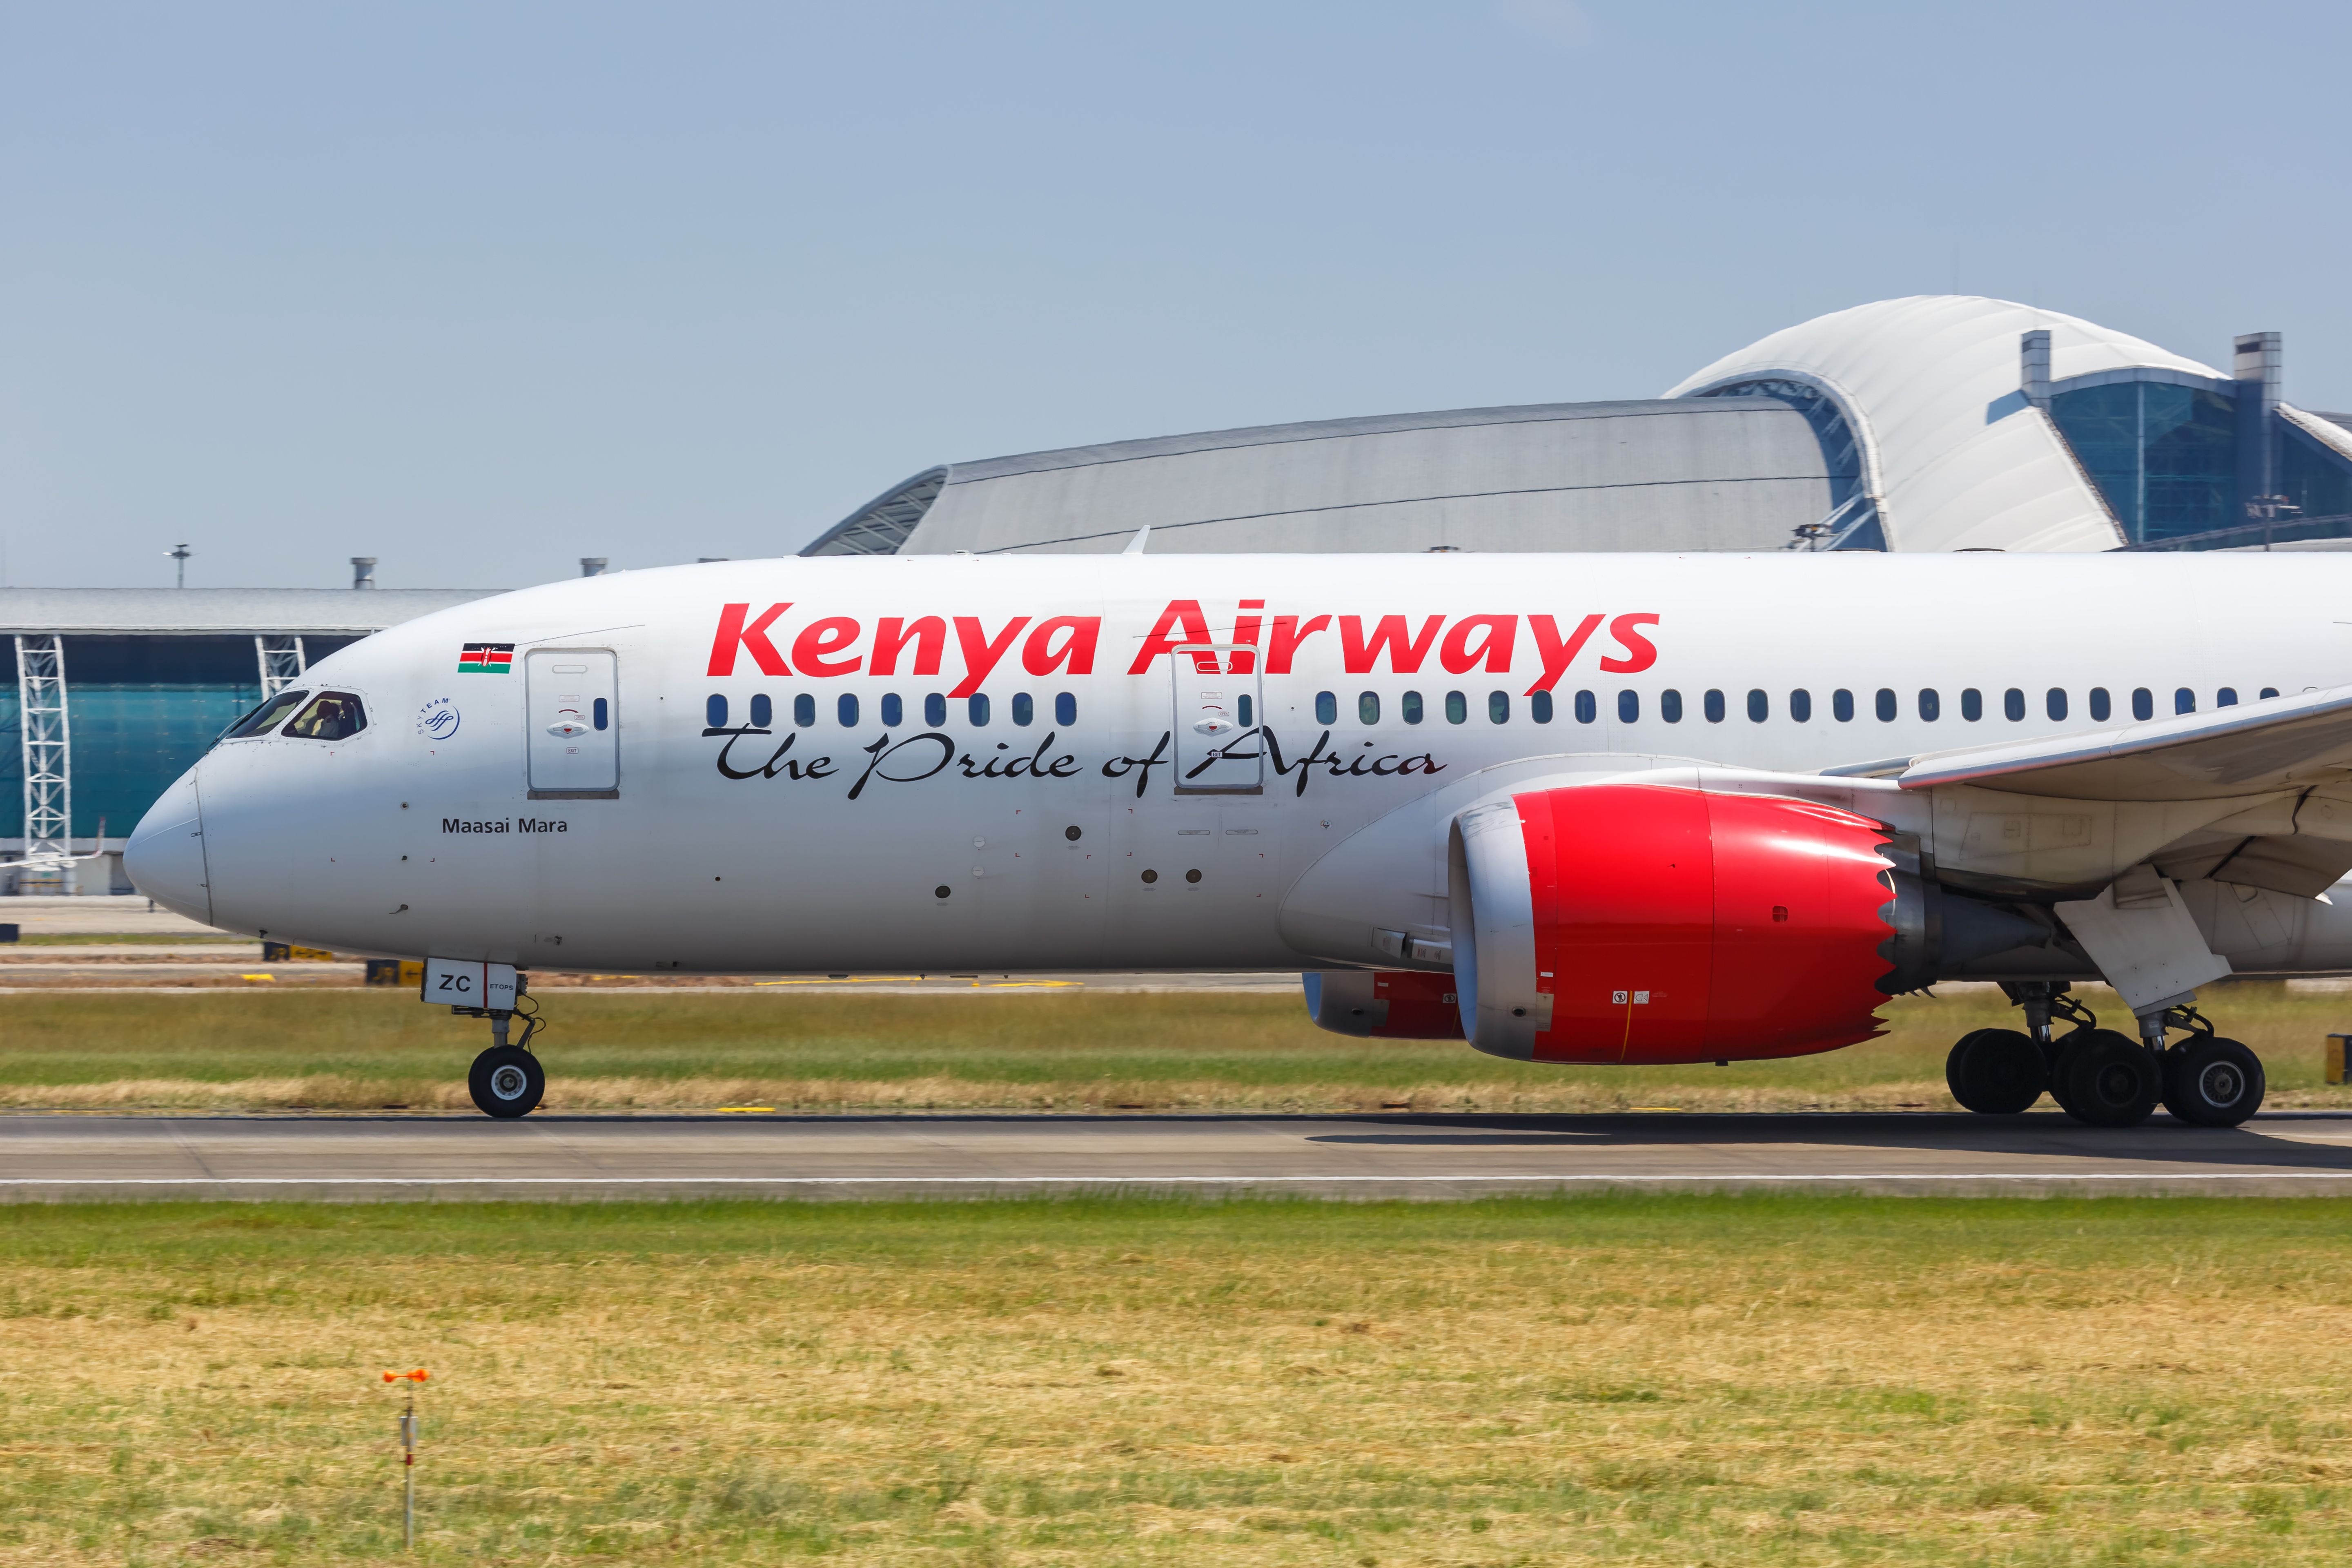 A Kenya Airways Boeing 787 aircraft